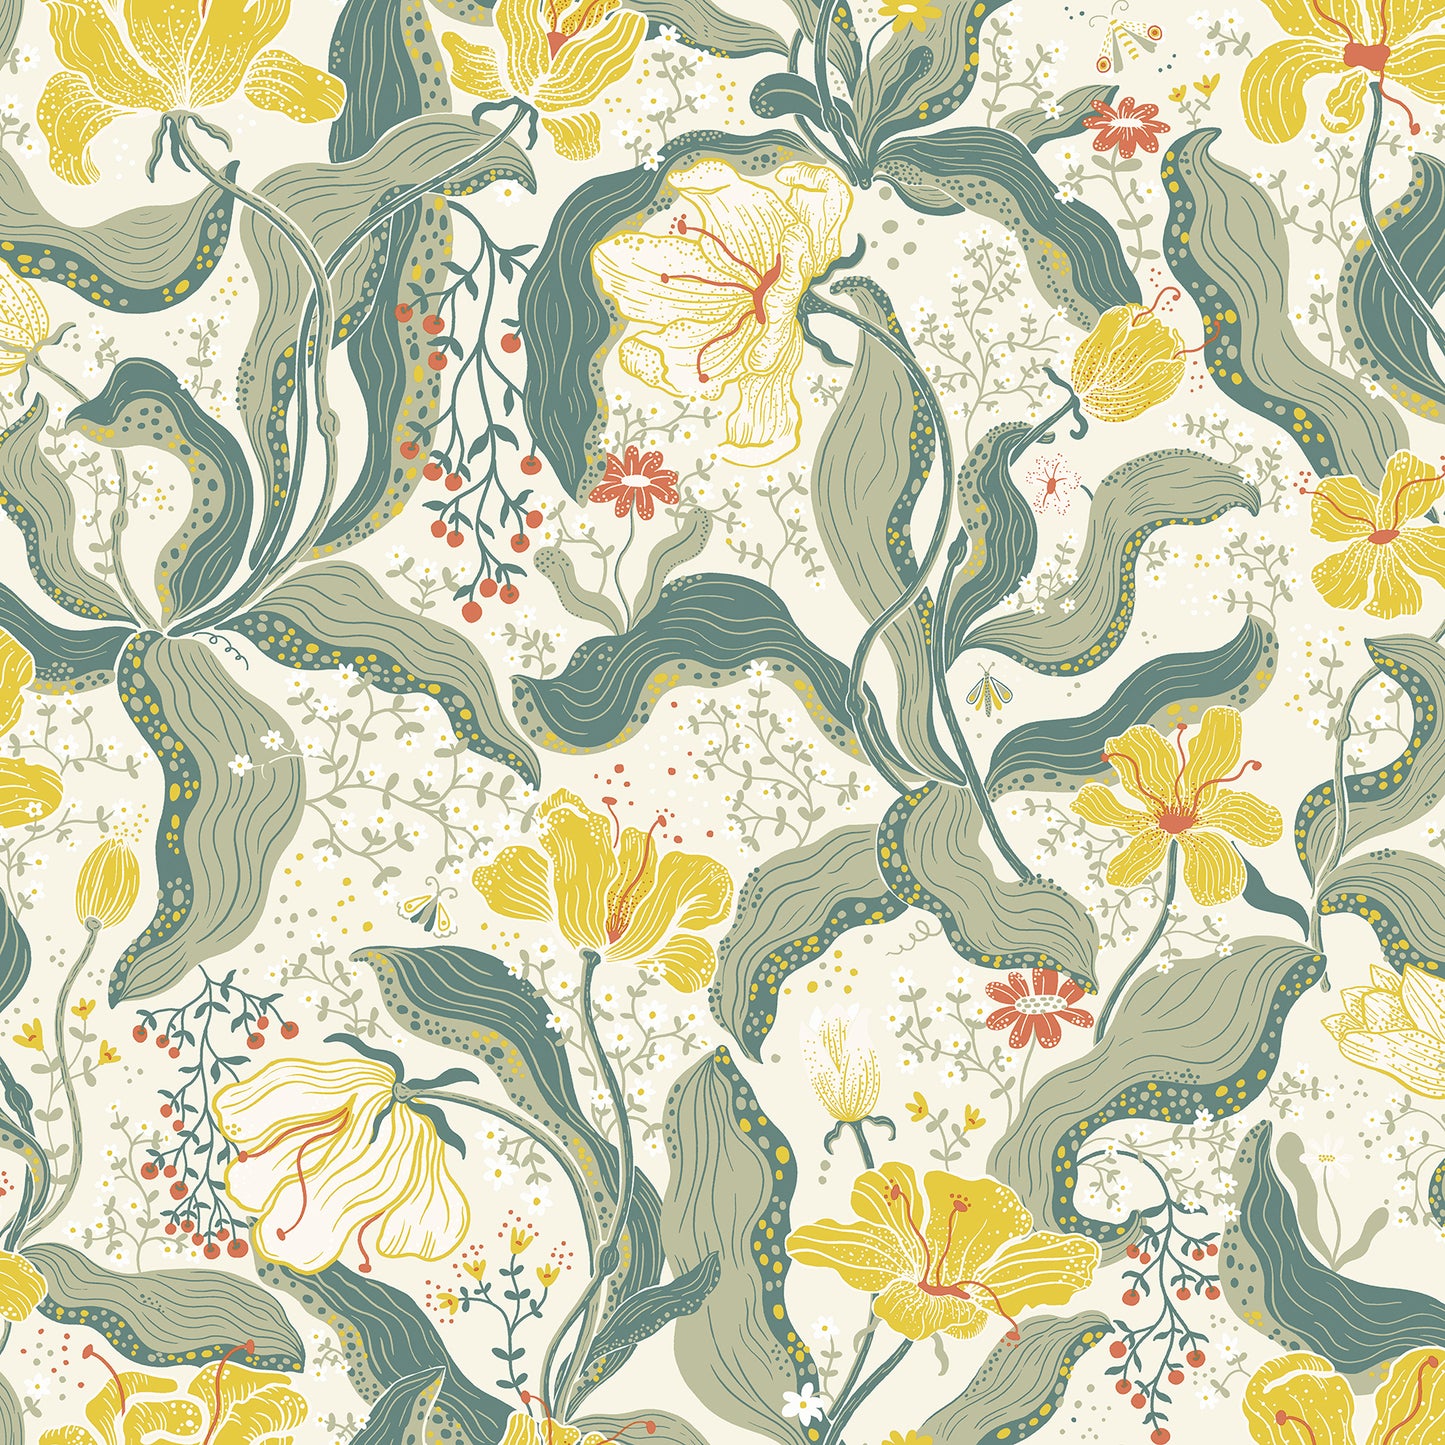 Order 2932-65118 Lina Bodri Yellow Tulip Garden Yellow A-Street Prints Wallpaper